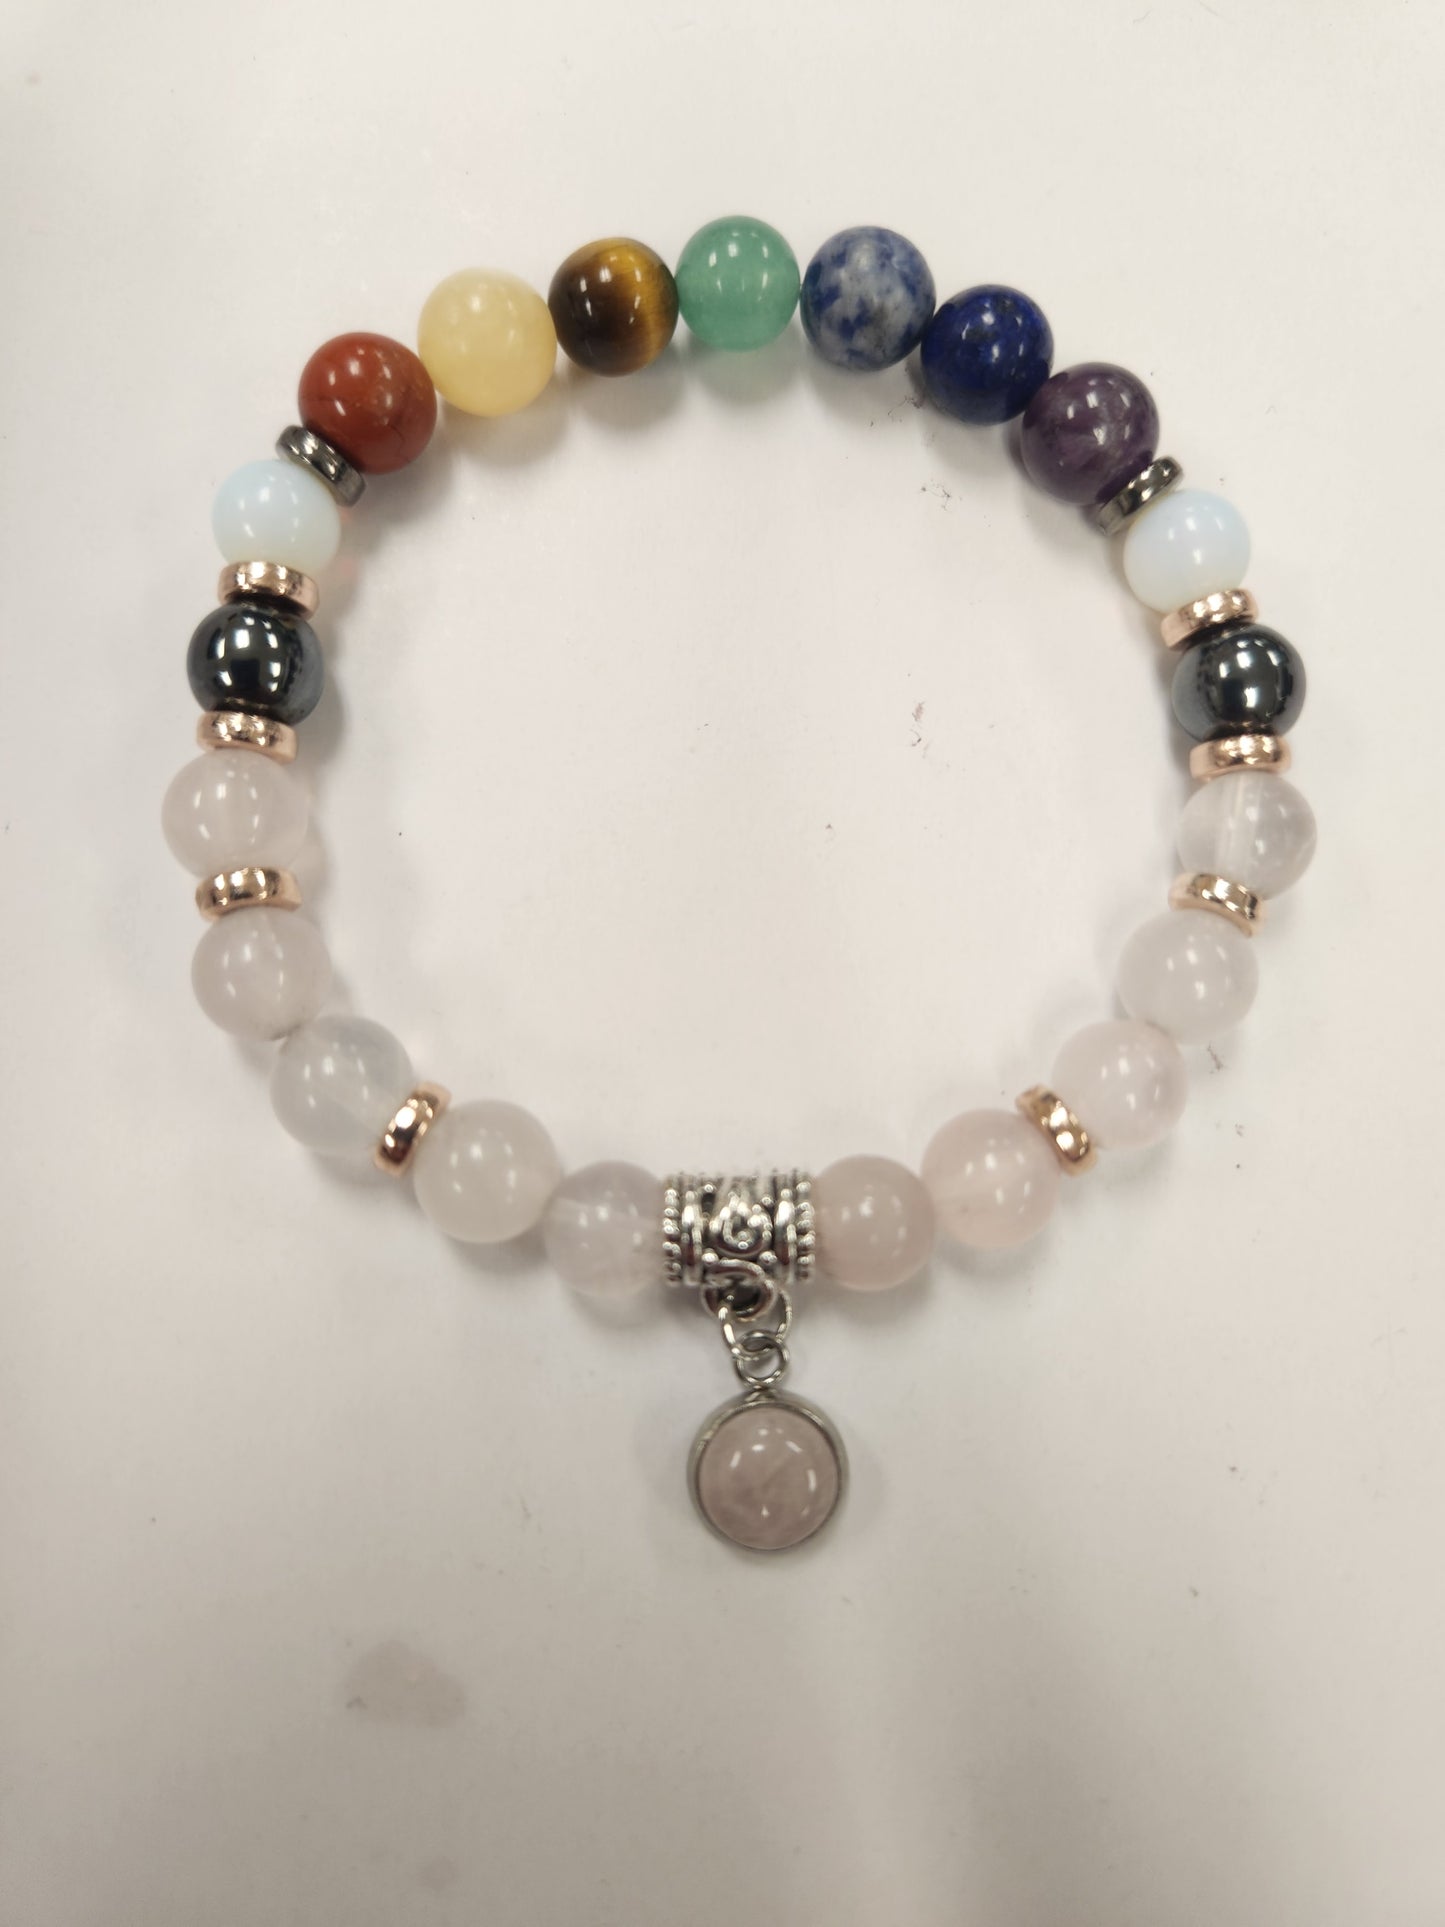 Chakra beads, semi-precious stone beads